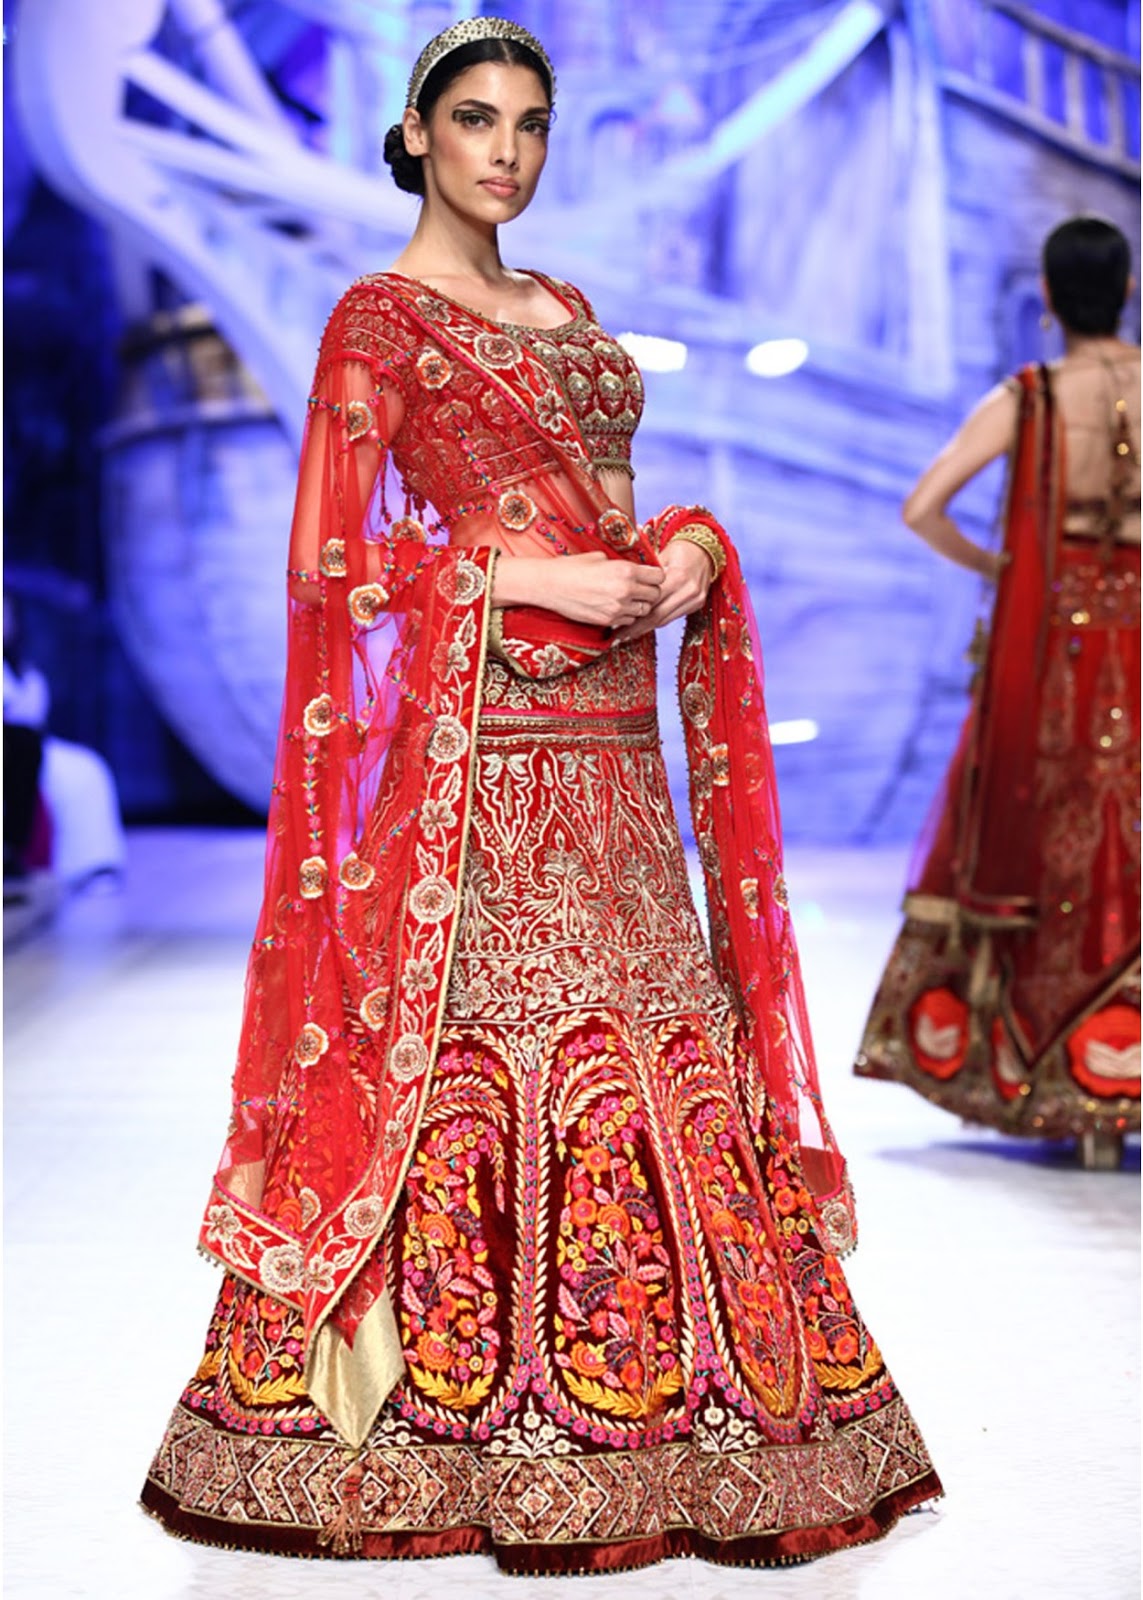 J J Valaya- Top 10 Popular & Best Indian Bridal Dresses Designers- Hit List (1)